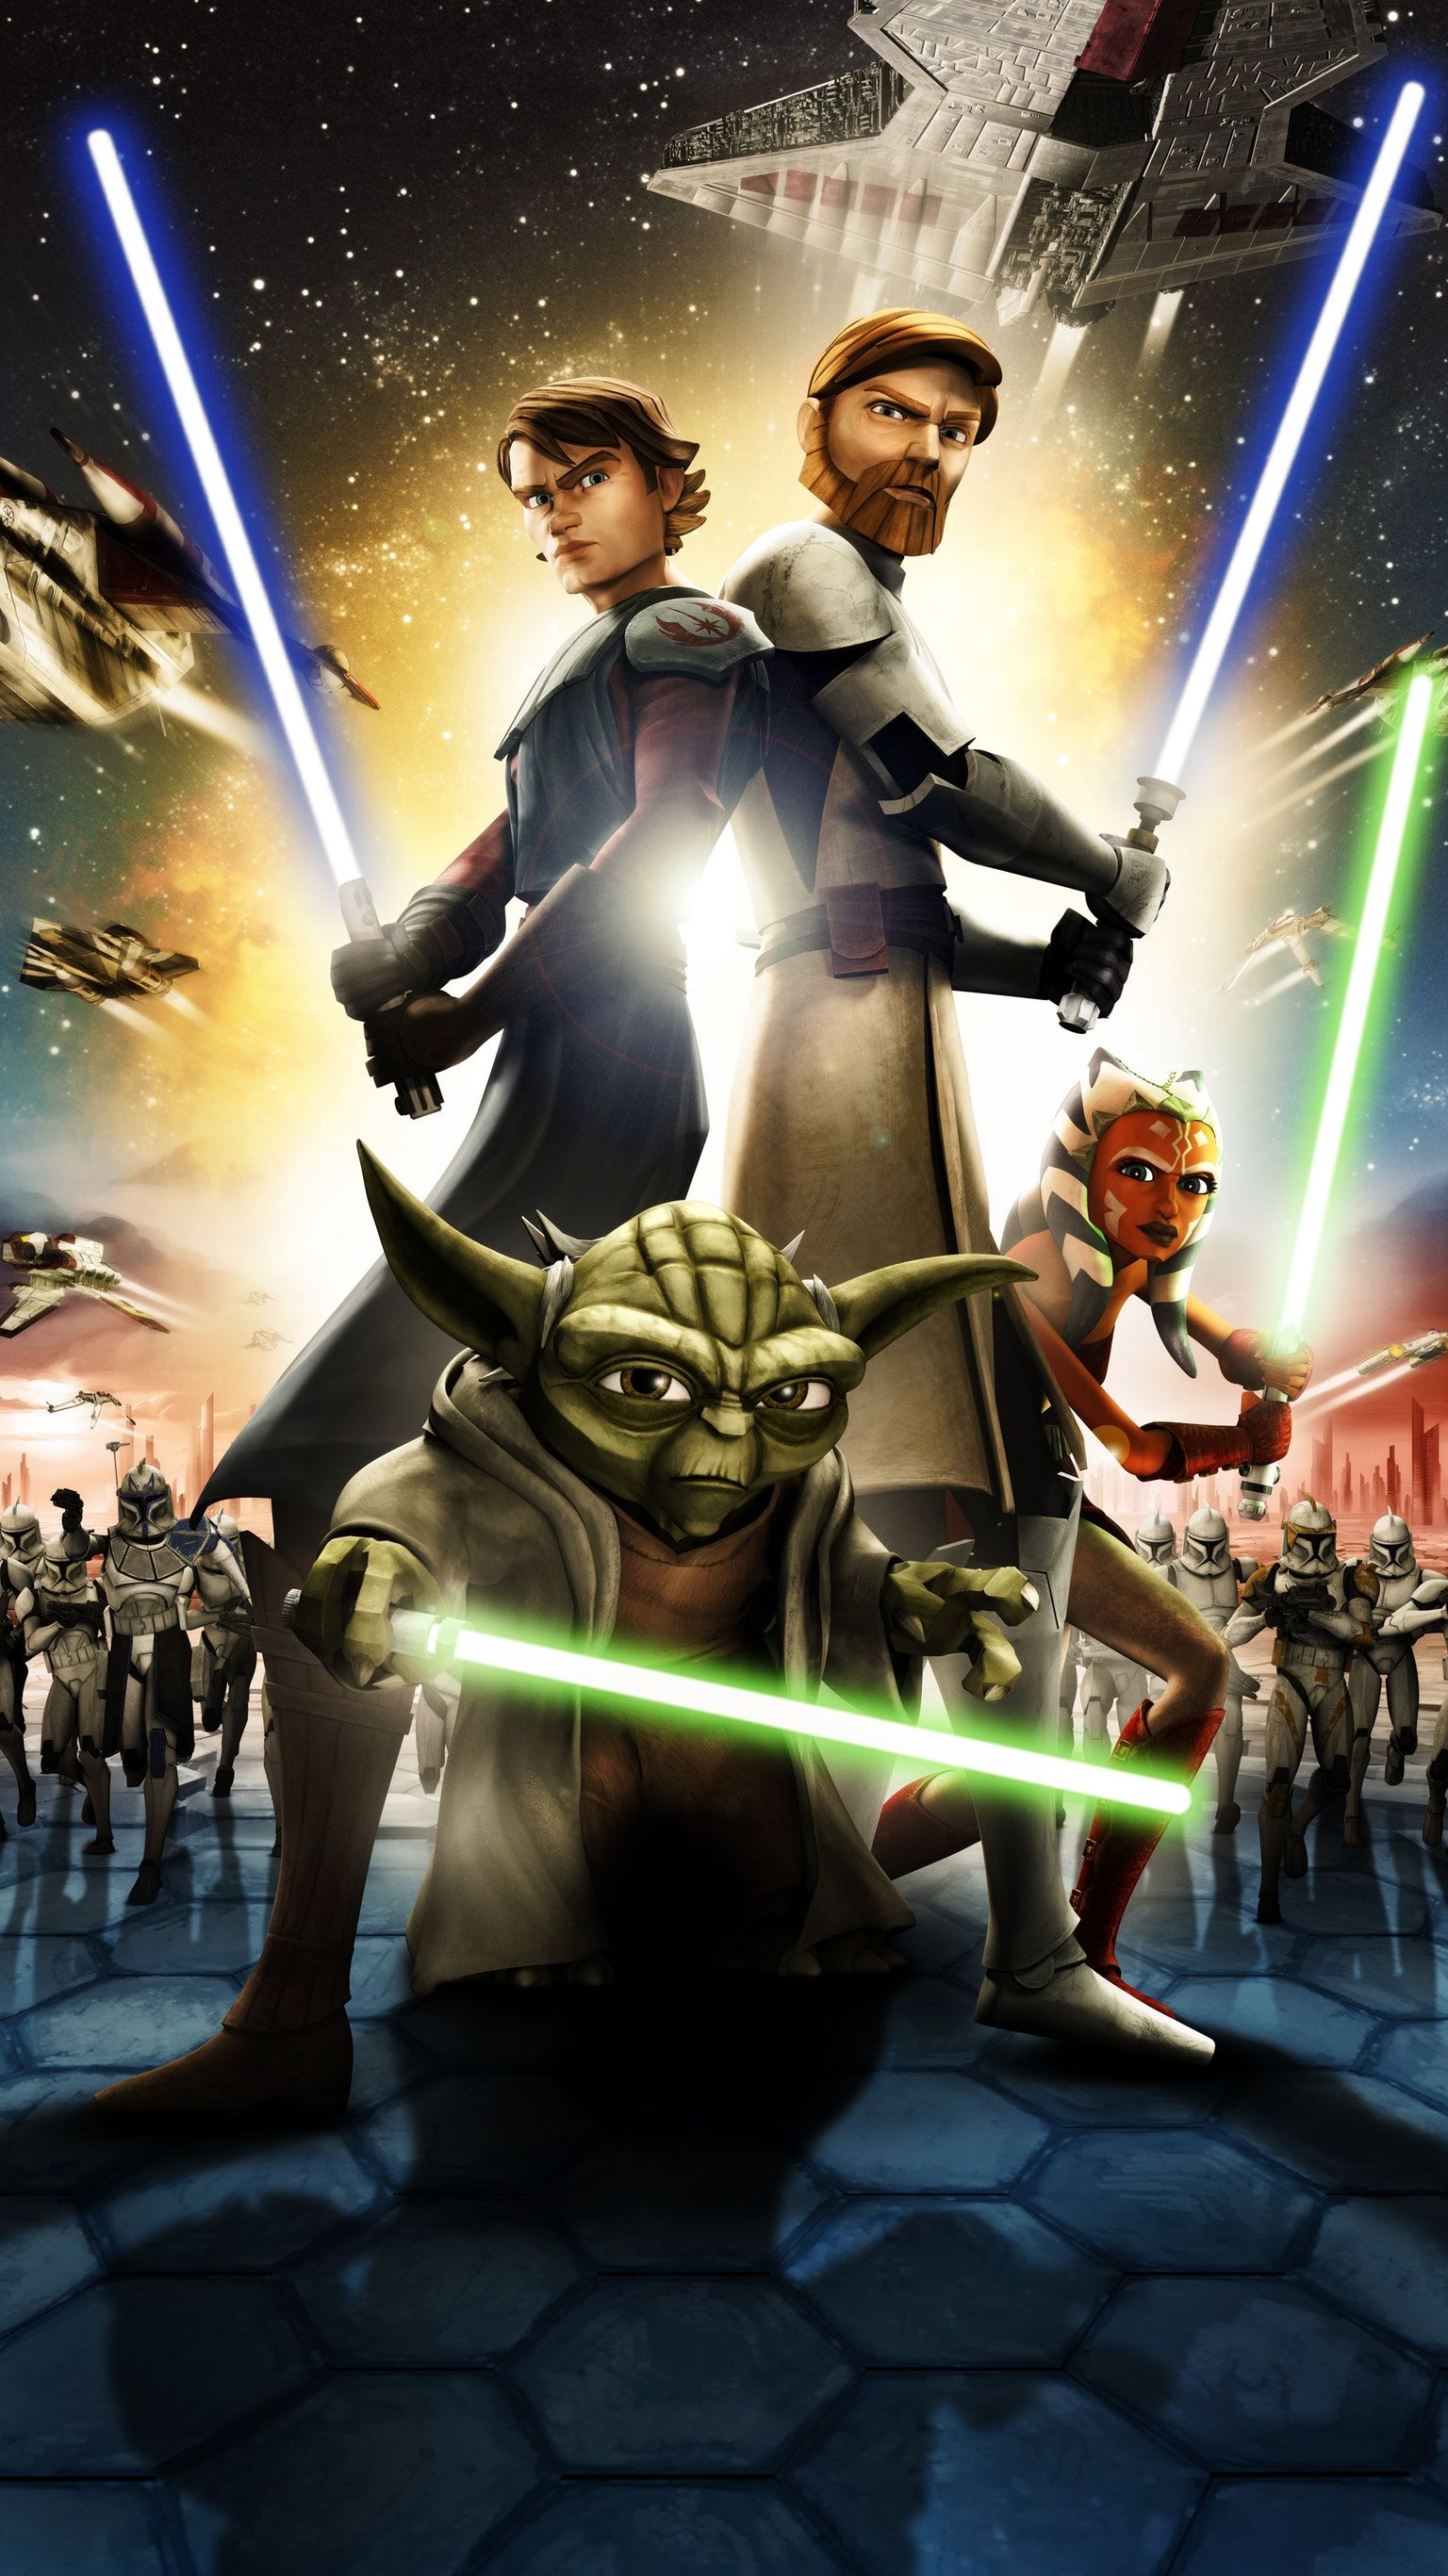 Star Wars: The Clone Wars (2008) Phone Wallpaper. Moviemania. Star wars film, Clone wars, Star wars watch